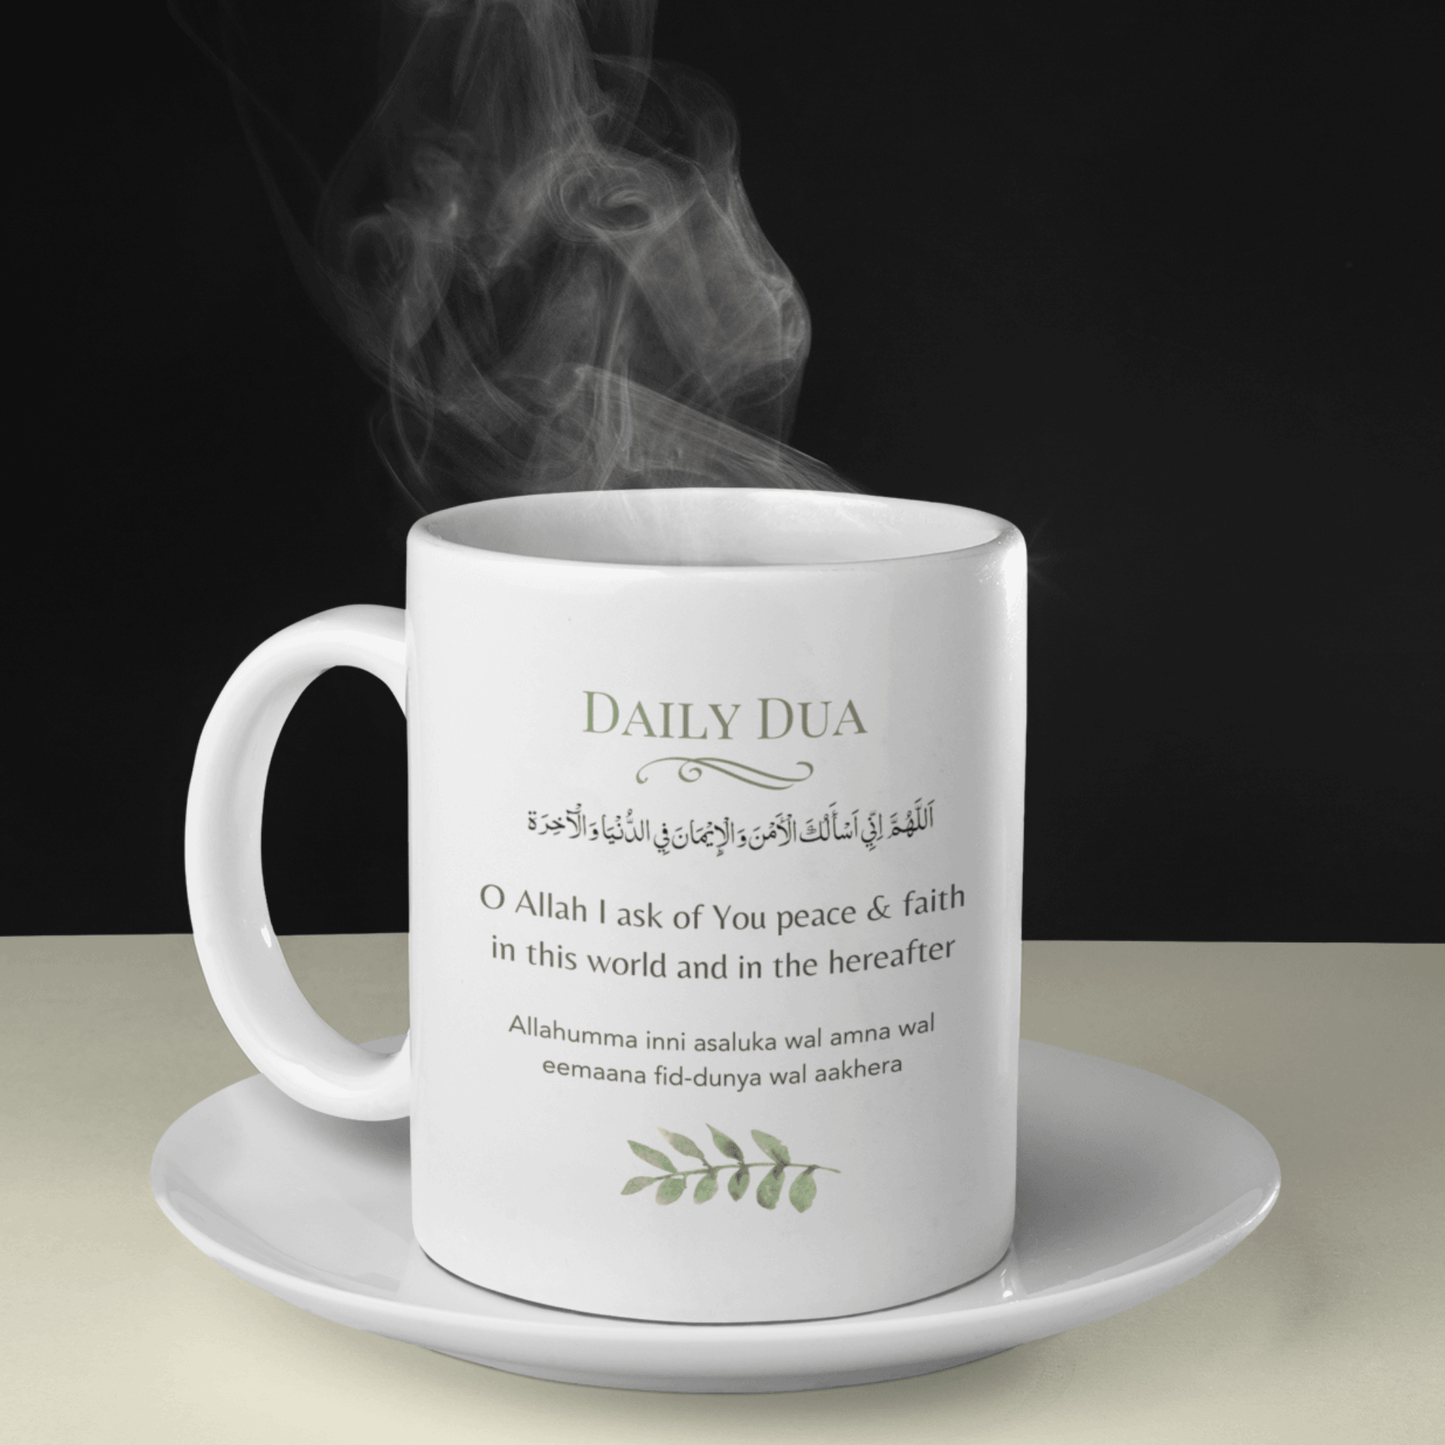 Daily Dua Coffee Mug | Safety, Security and Peace - SunnahBay